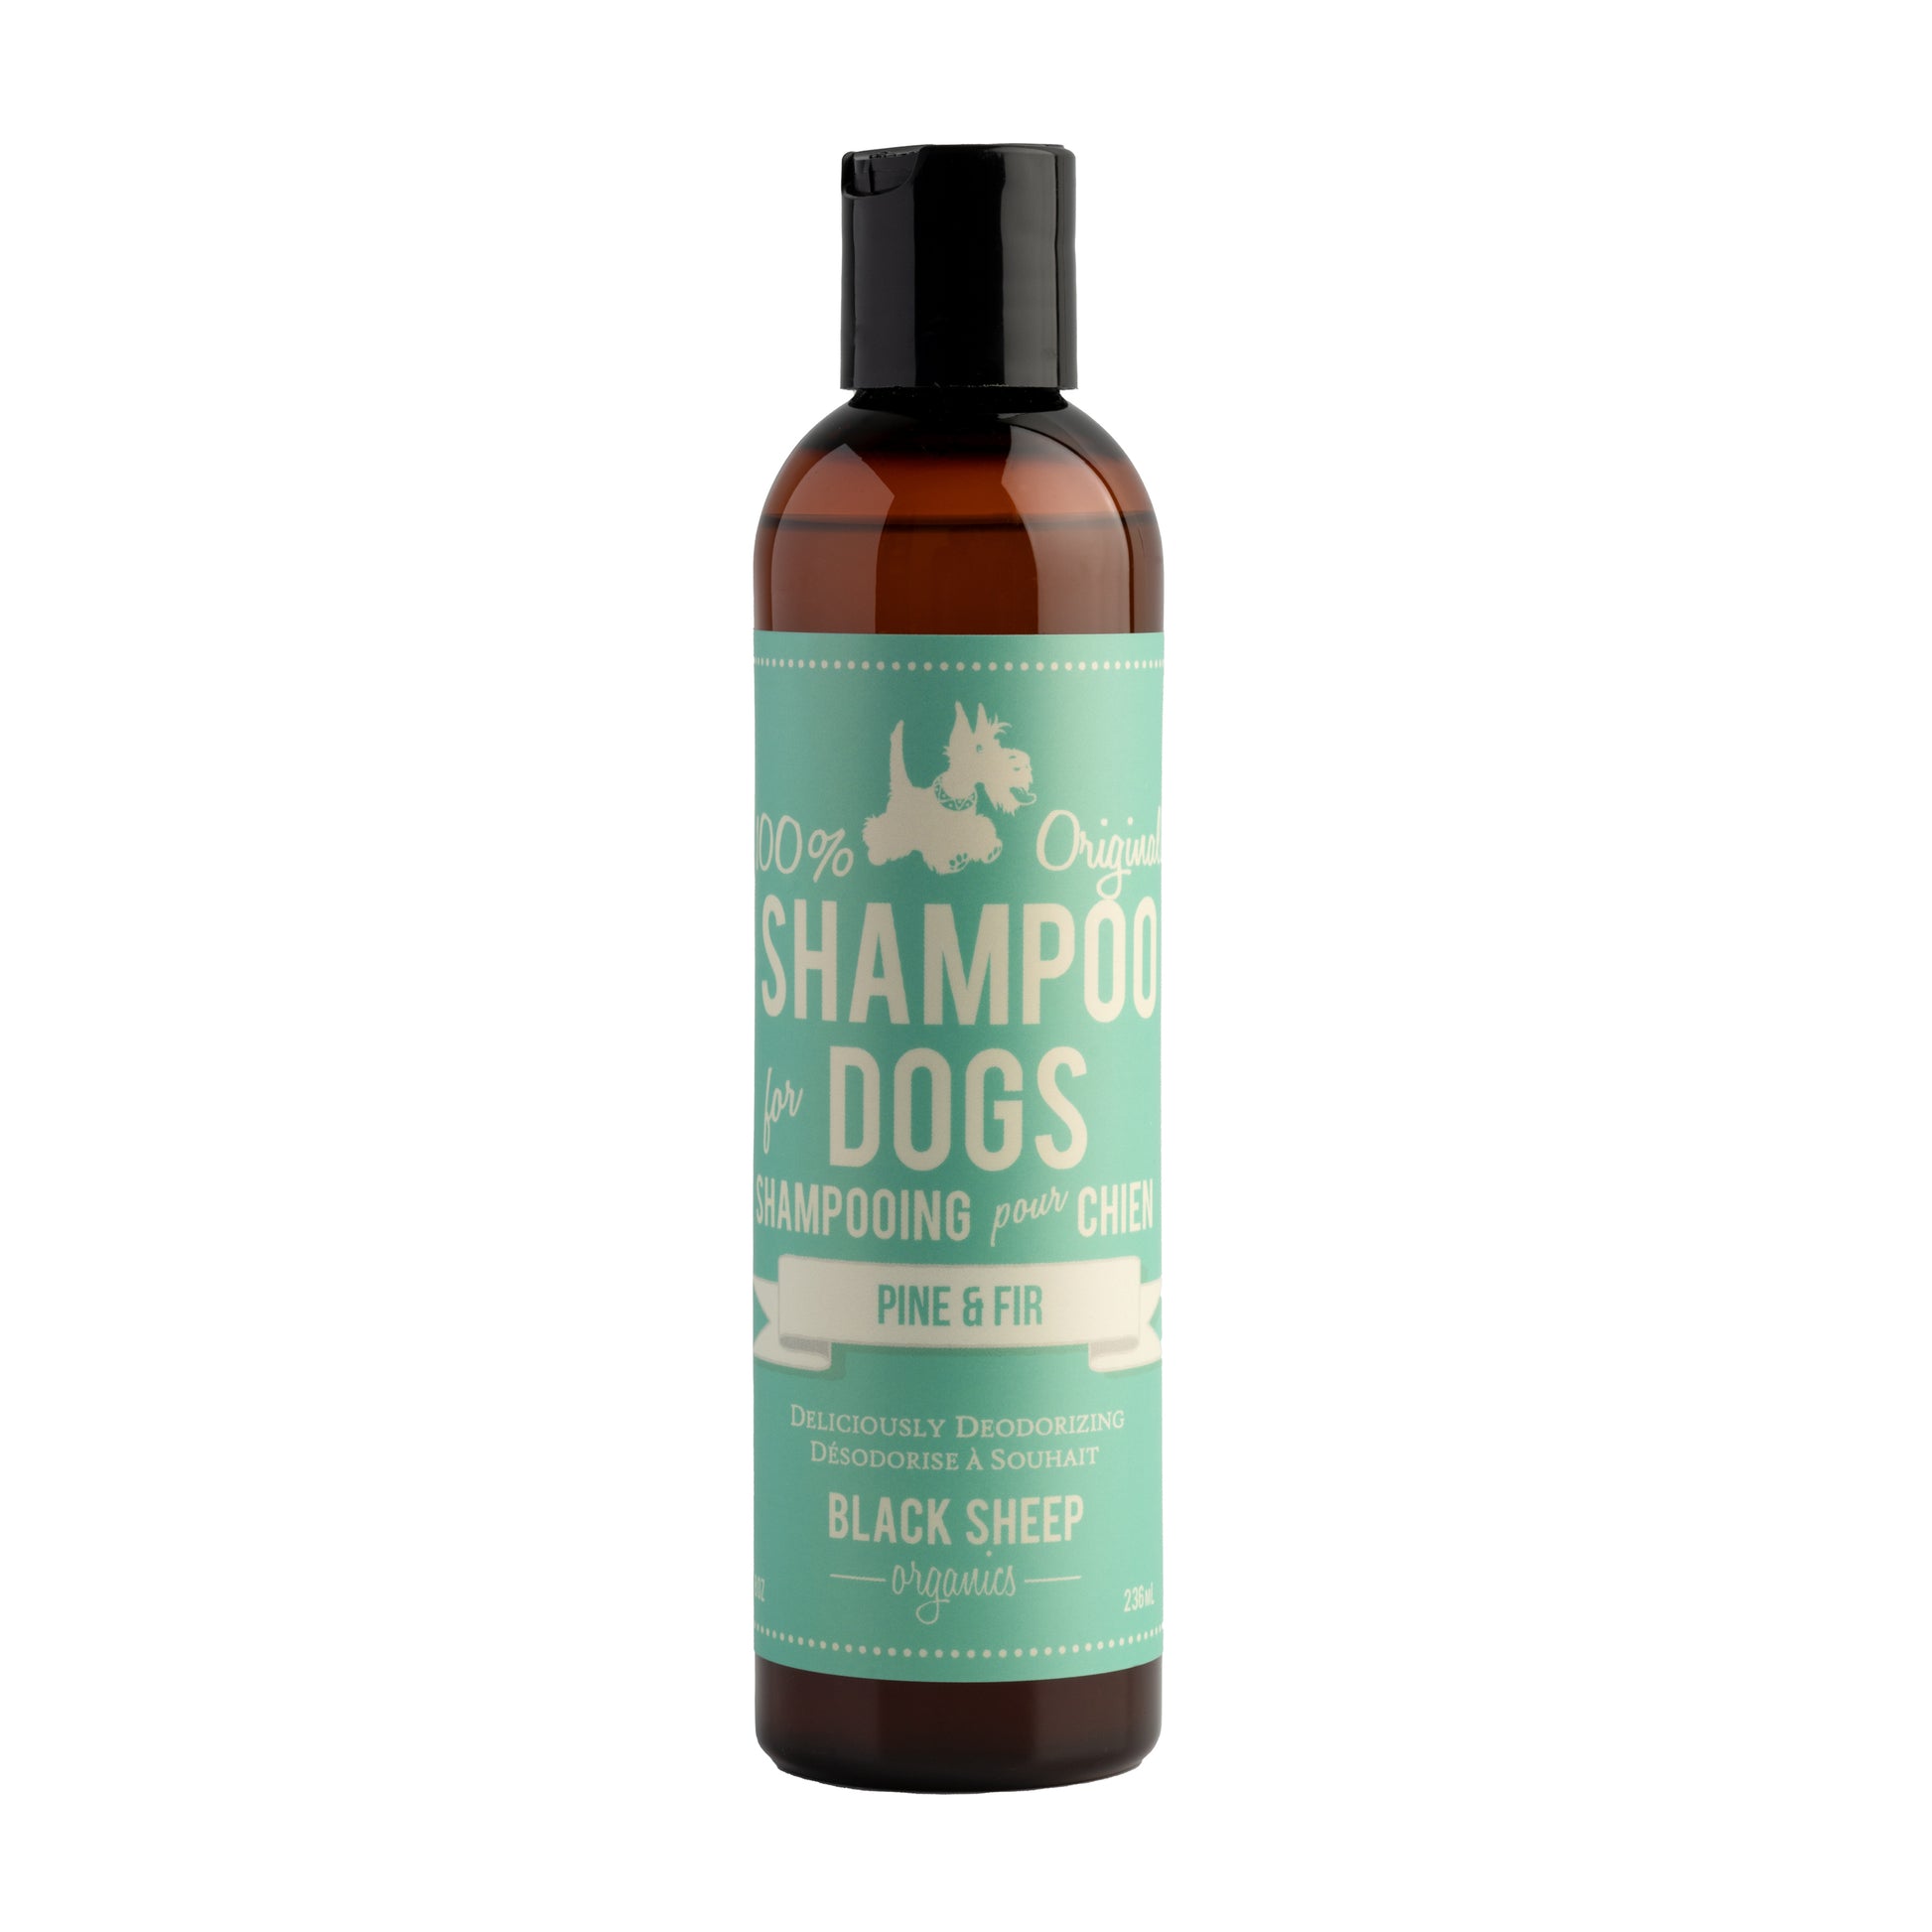 A pine & fir organic dog shampoo from Black Sheep Organics that can help deodorize wet doggie smell.